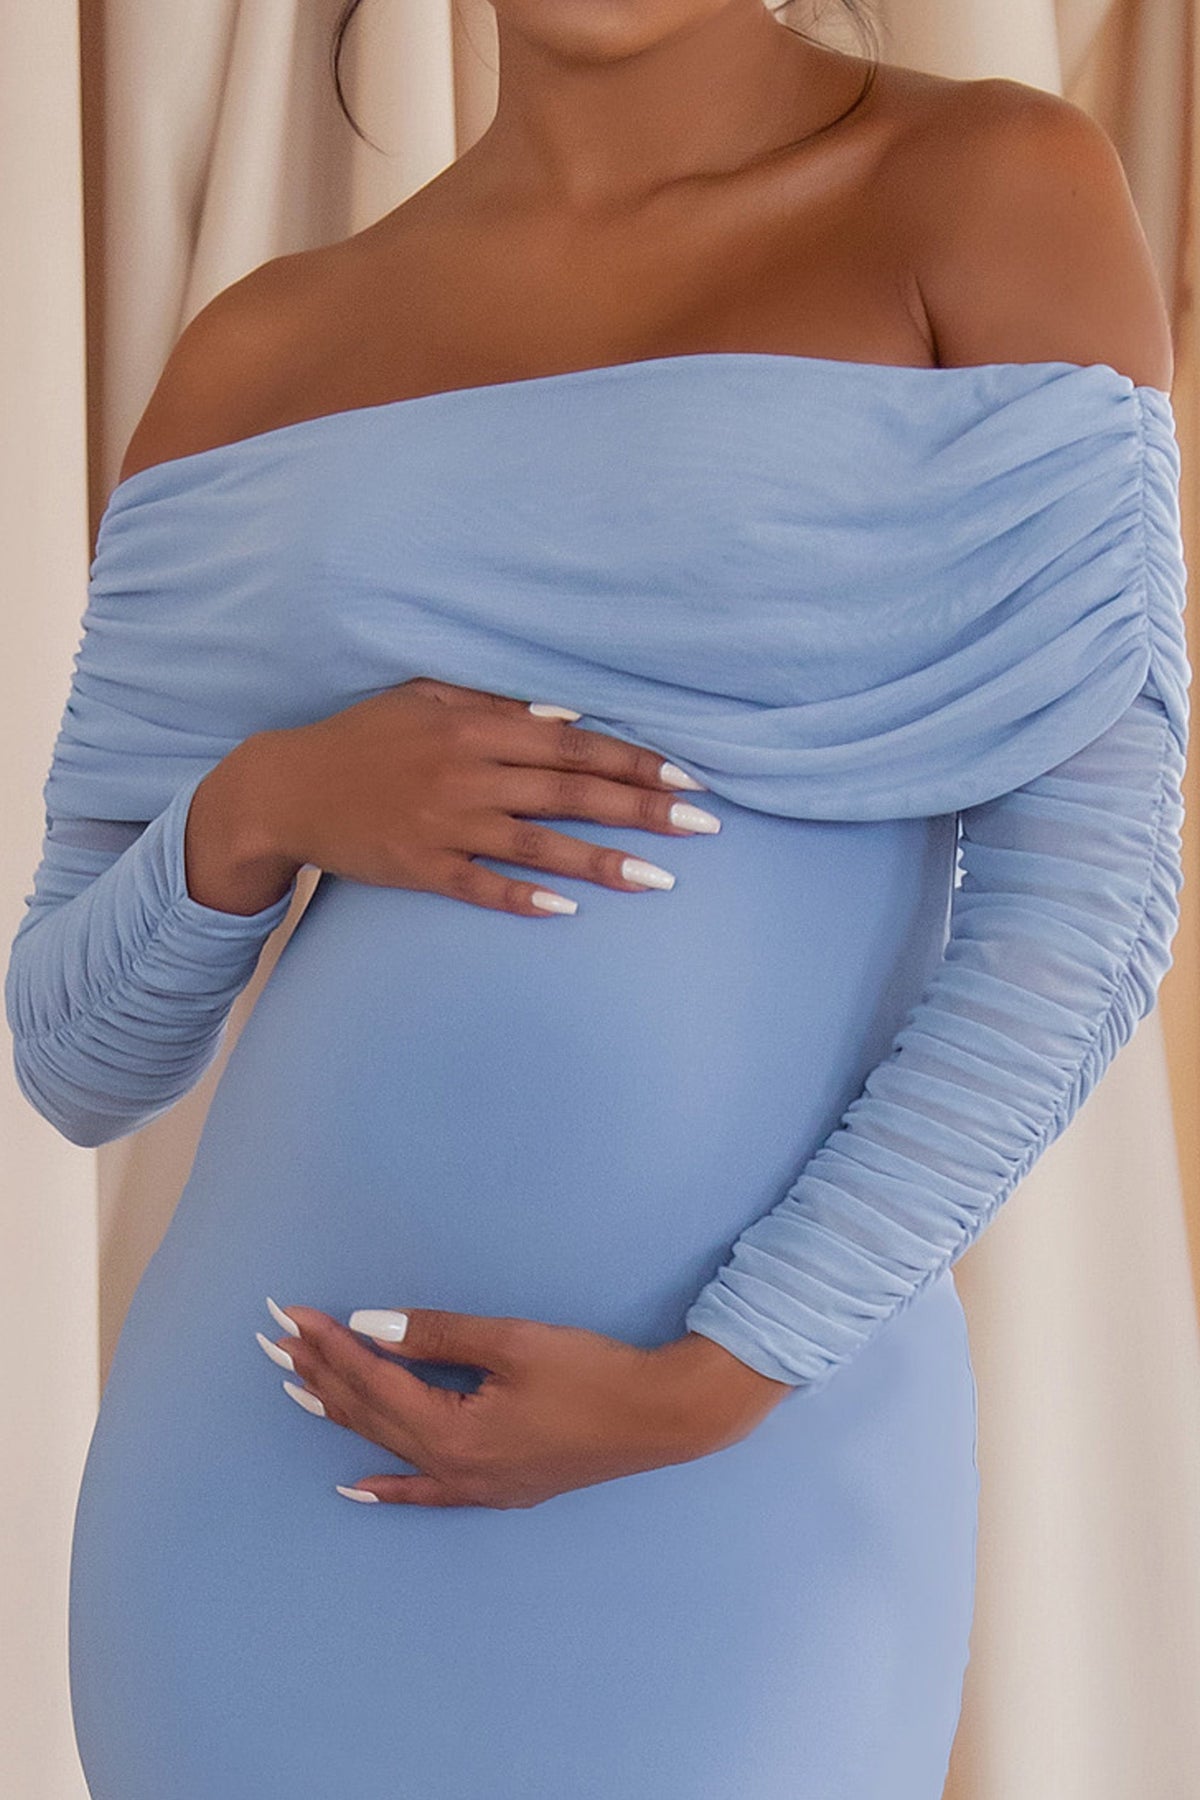 Ripe Maternity Pool Blue Cocoon Dress 25%